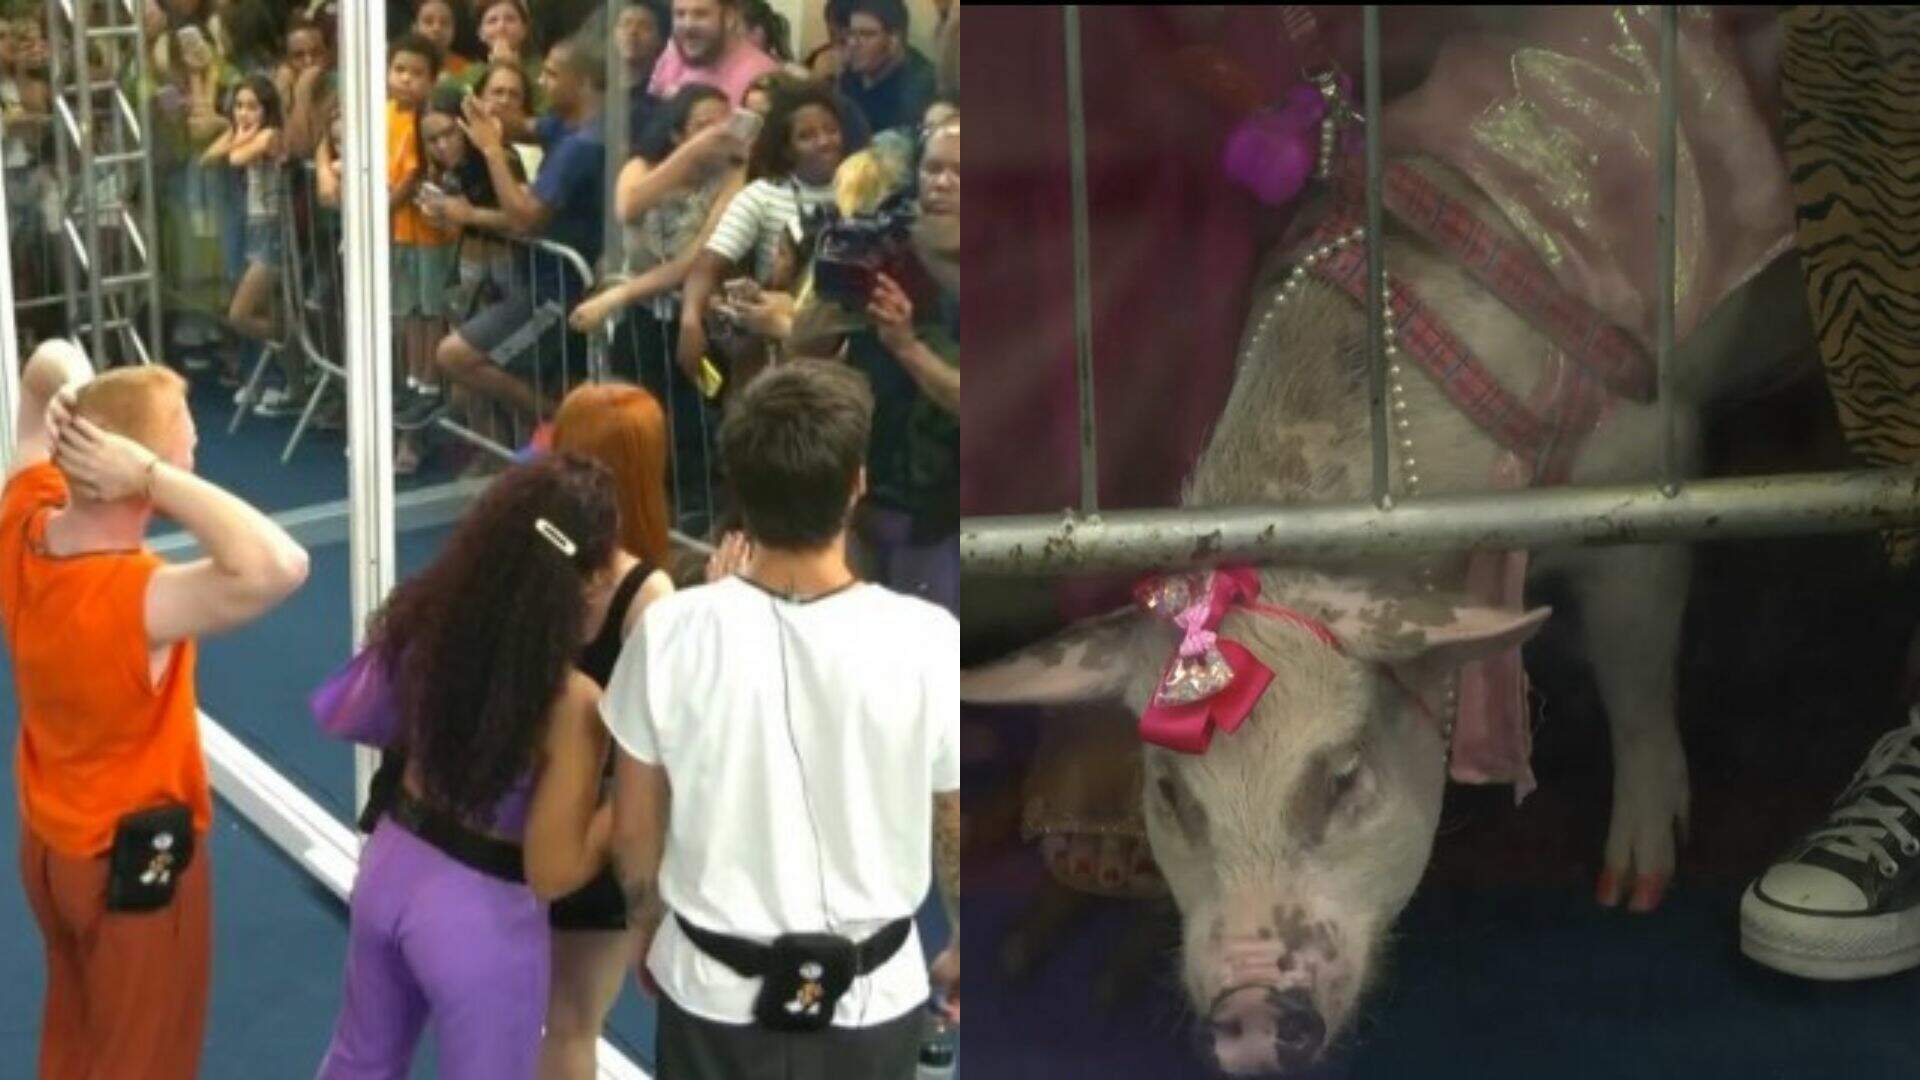 BBB 23: Visita inesperada! Família leva porco para a Casa de Vidro e surpreende moradores - Metropolitana FM